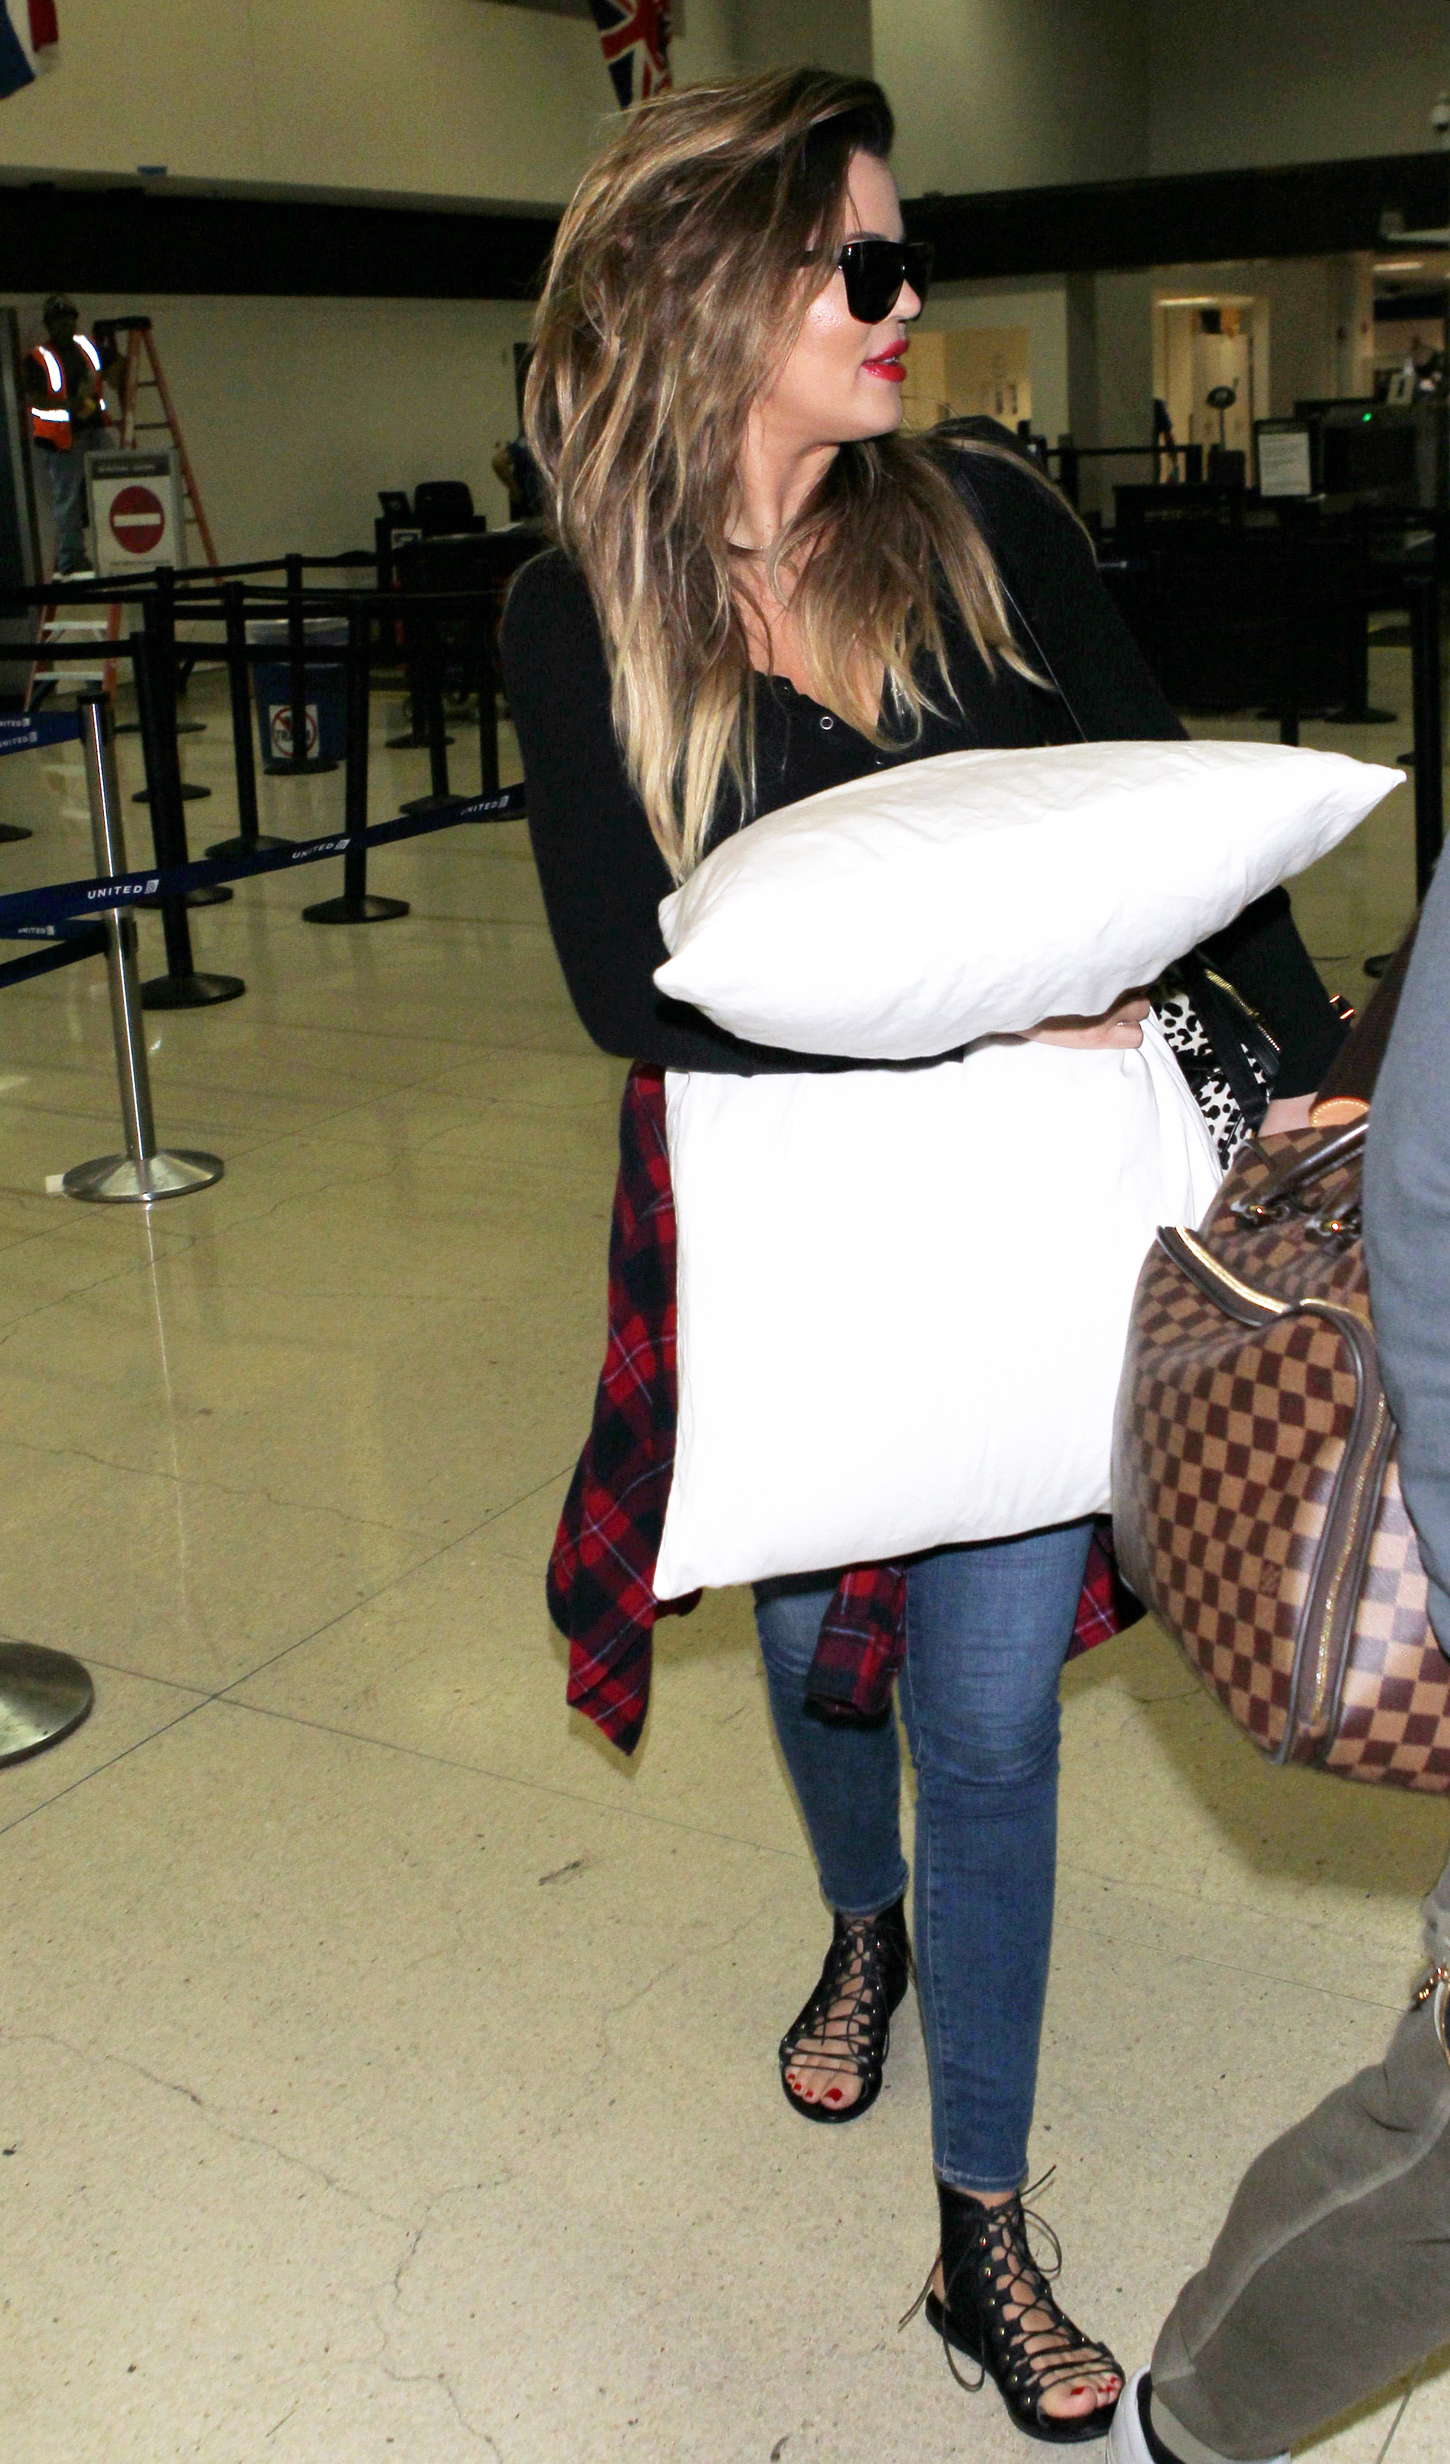 Khloe Kardashian 2014 : Khloe Kardashian with Scott Disick at LAX airport -03